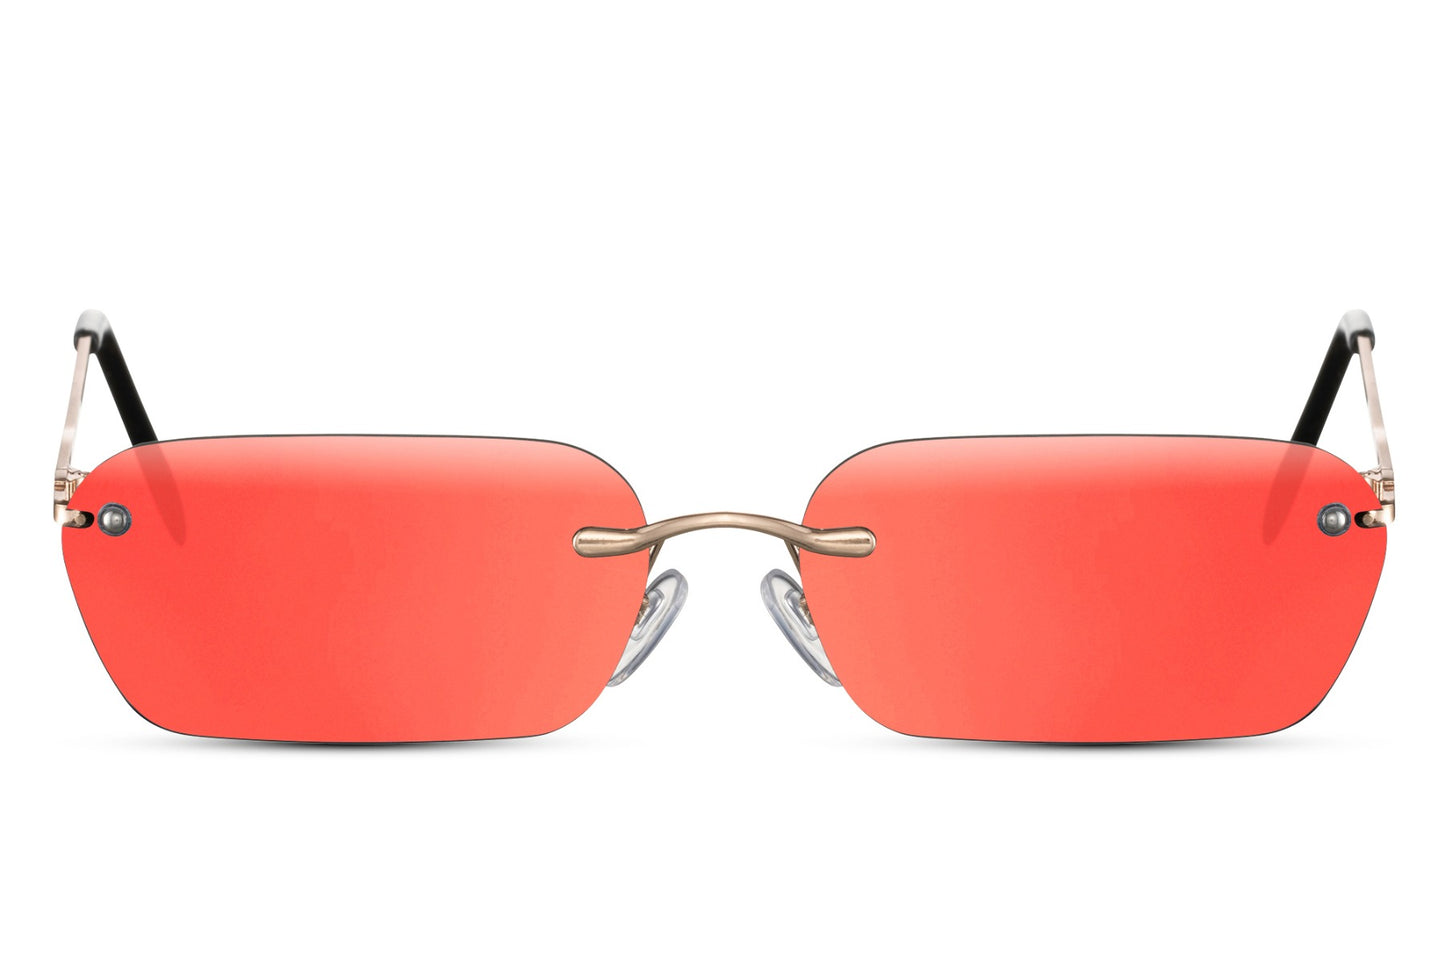 Metallic Sunglasses